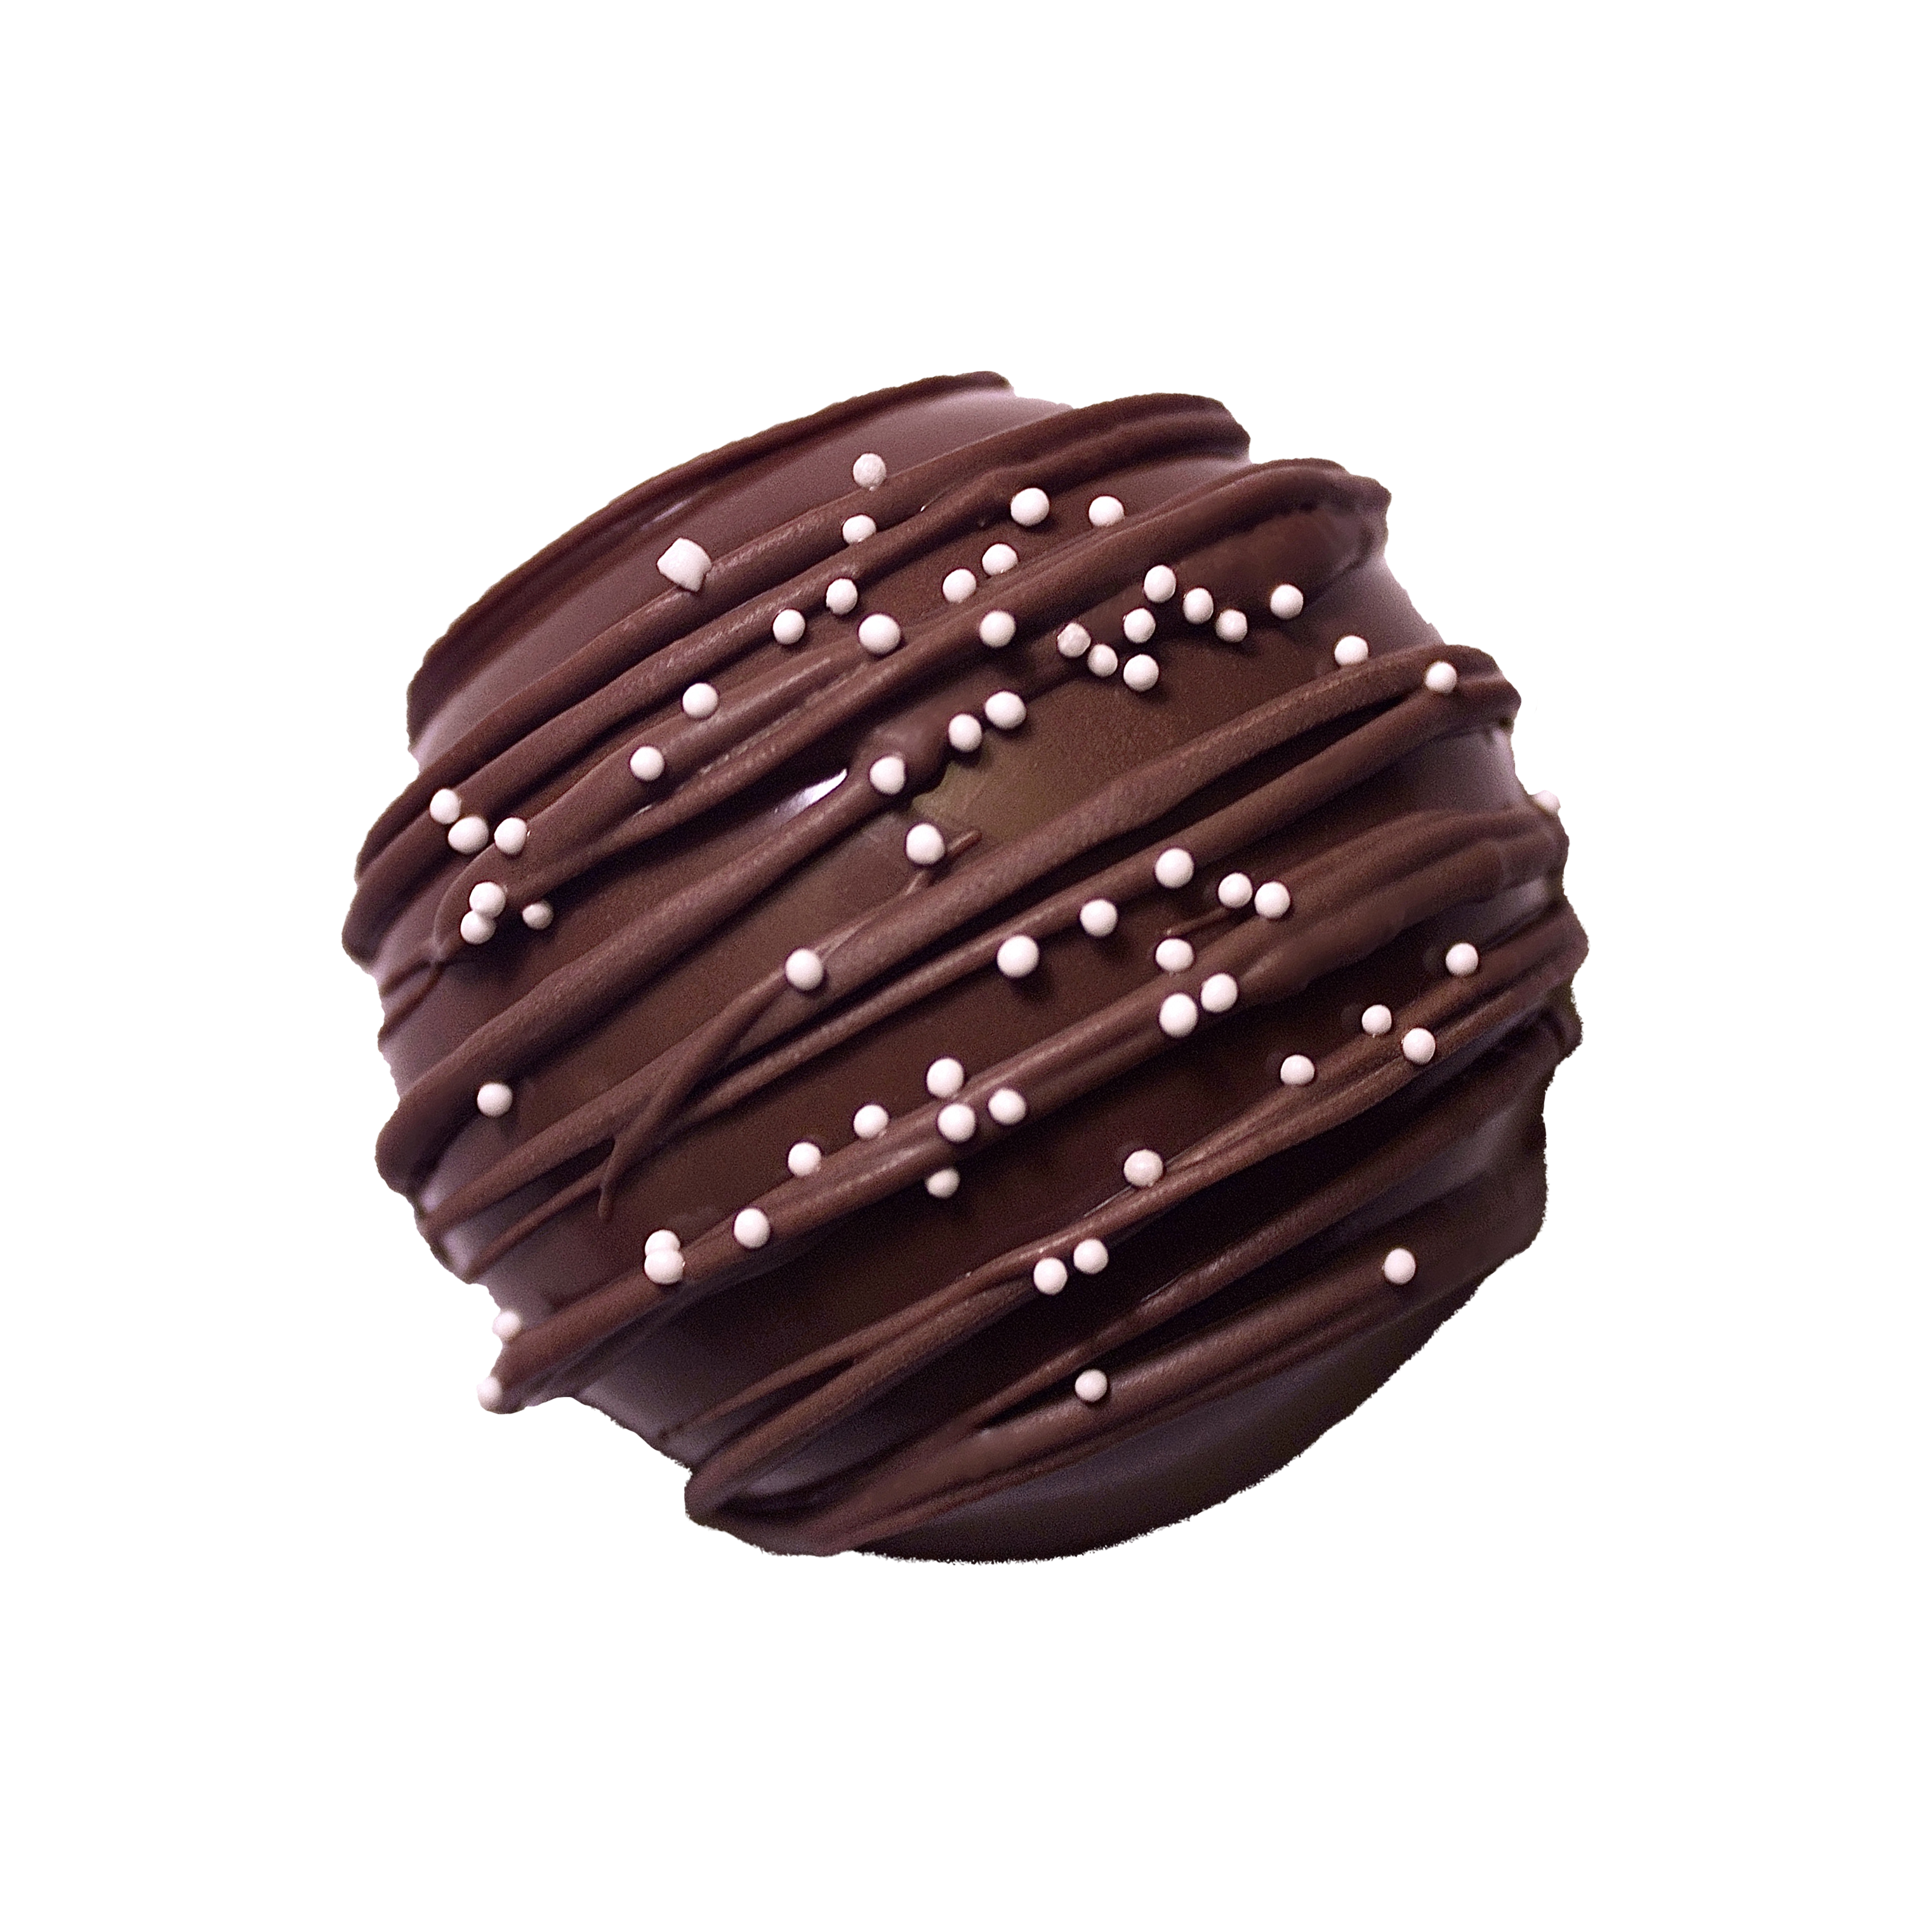 Confetti Sprinkles Chocolate Covered Cake Truffle Cake Pop